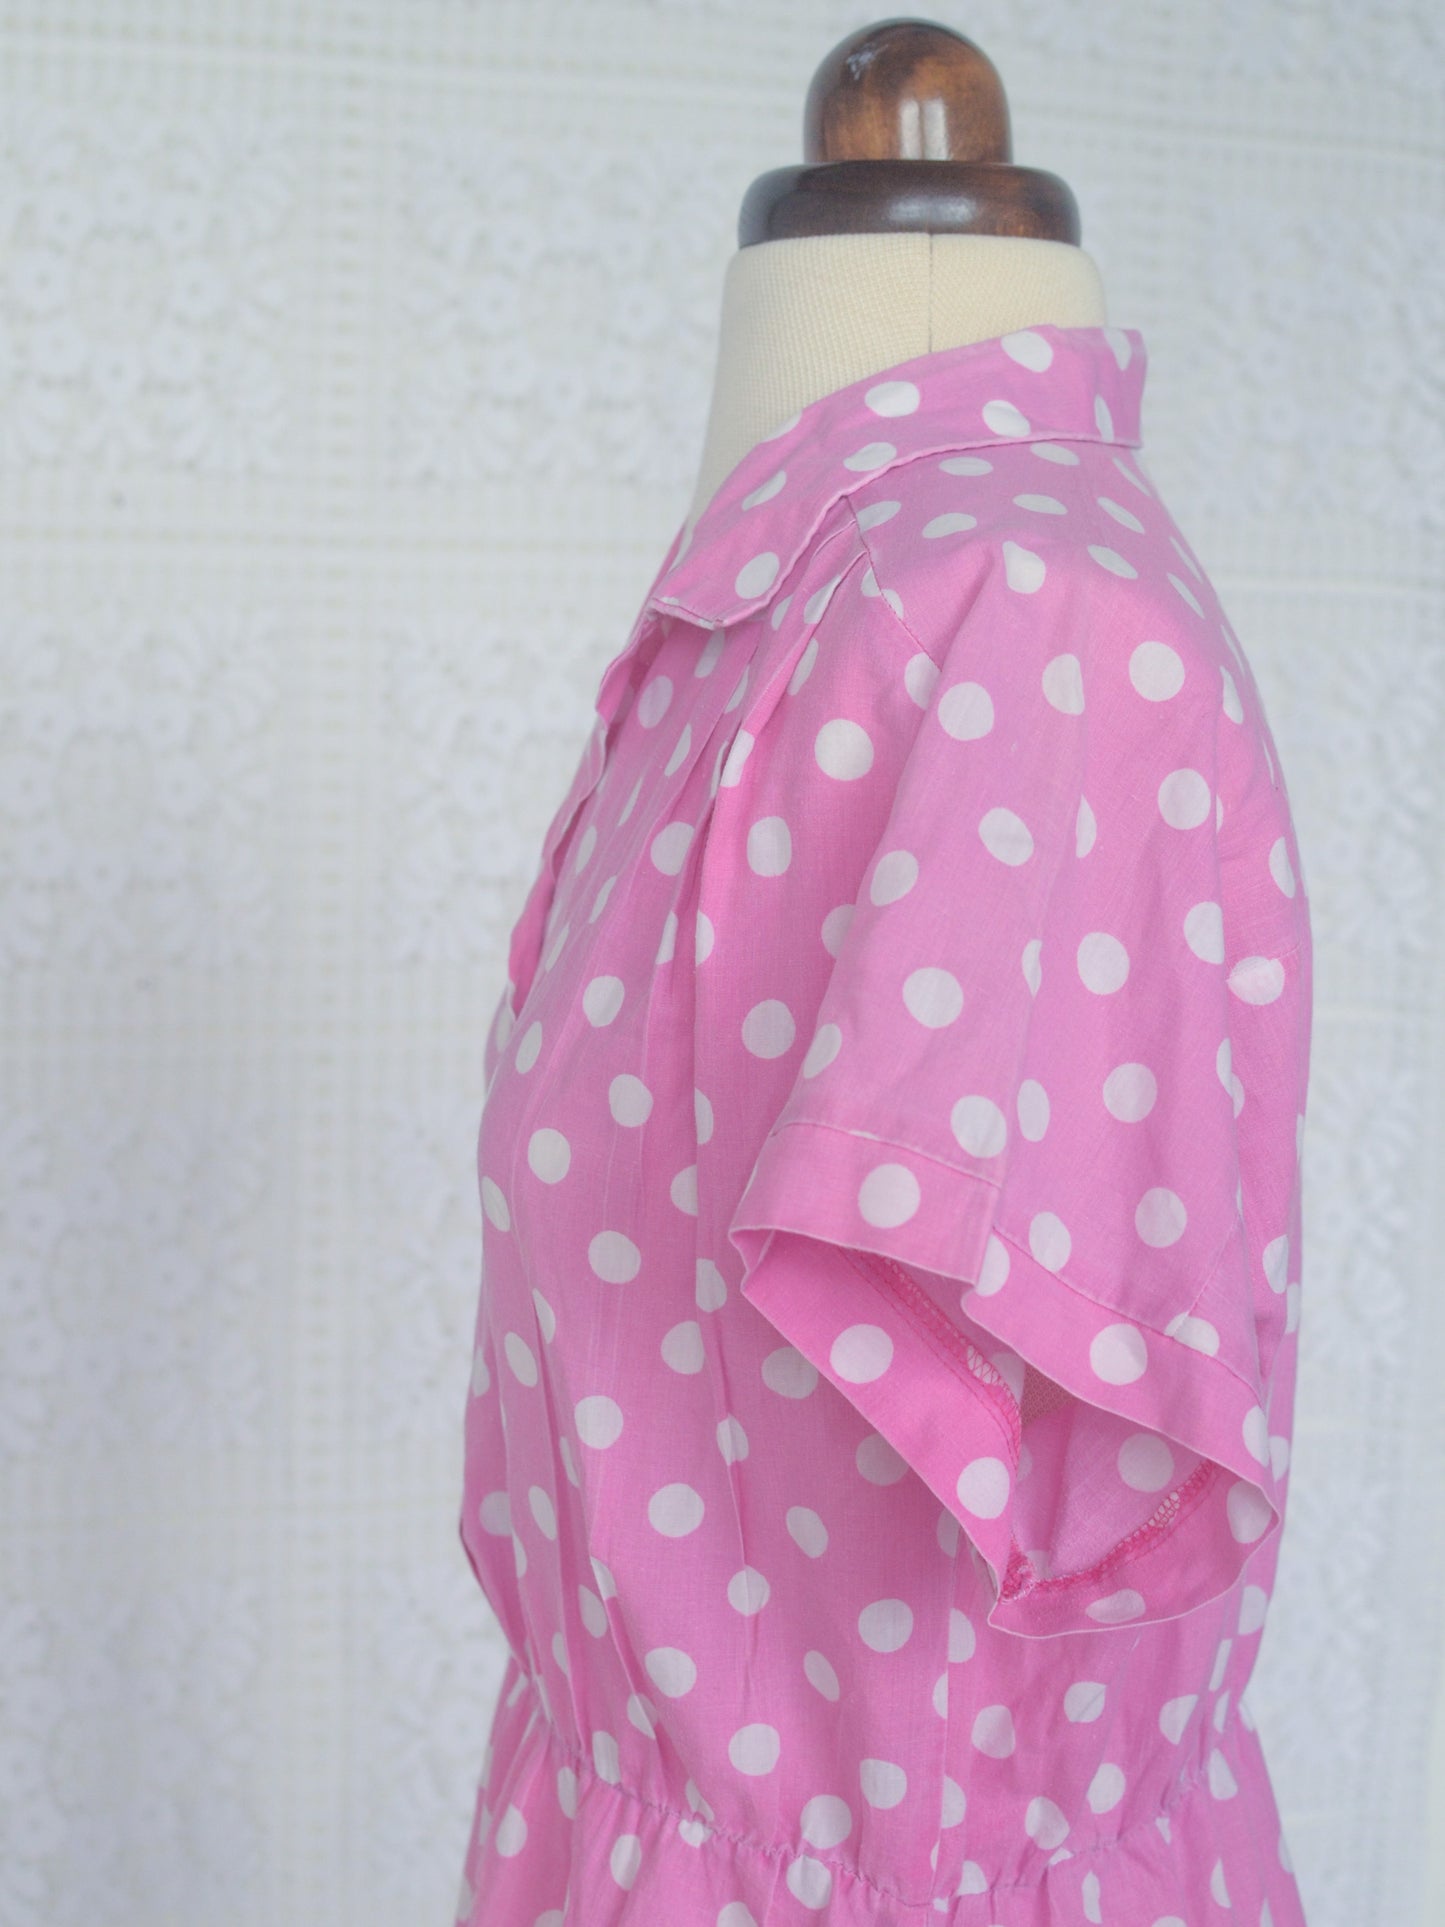 1980s style pink and white polkadot short sleeve shirt midi dress